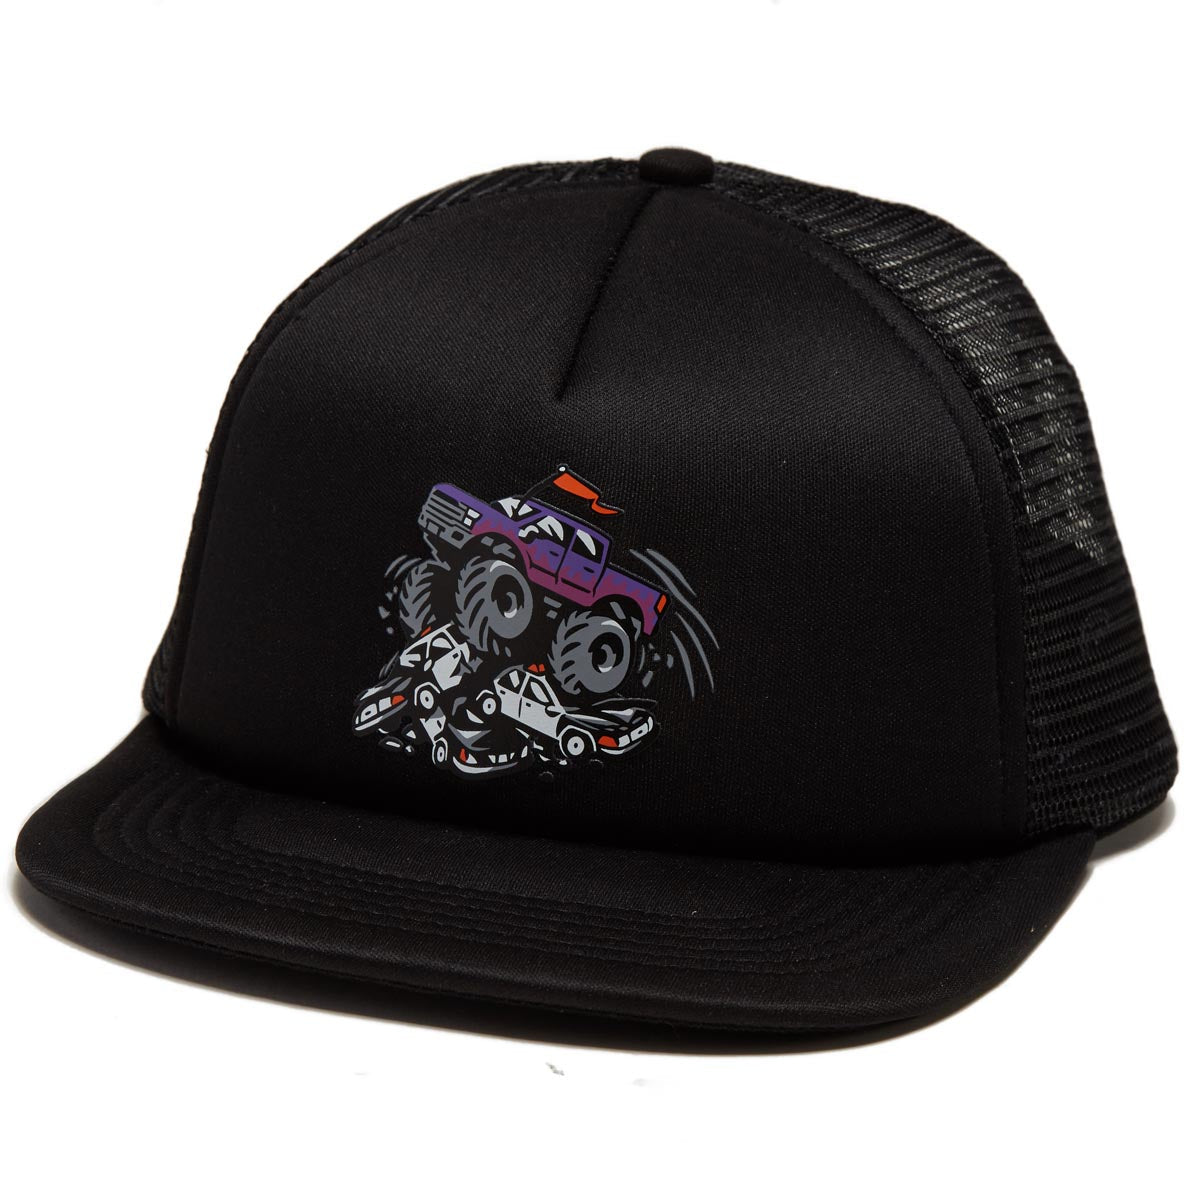 Real Pig Romp Trucker Hat - Black image 1